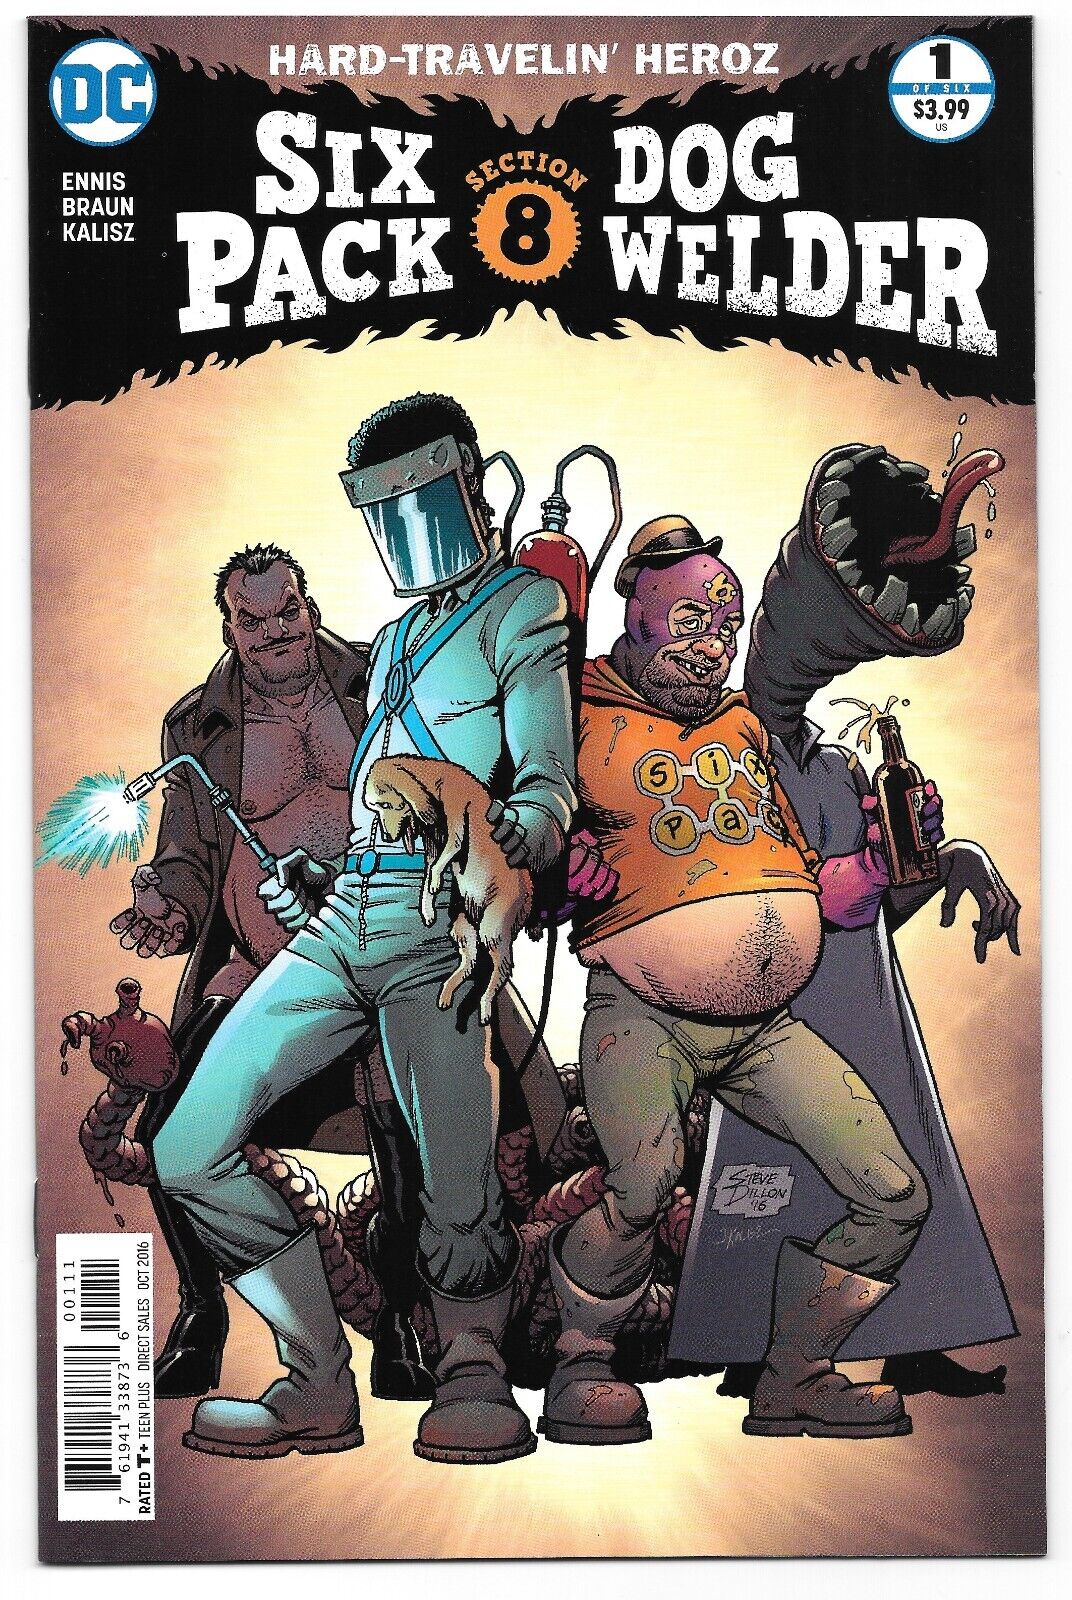 Section 8: Six Pack & Dog Welder #1 (08/2017) DC Comics Regular Cover